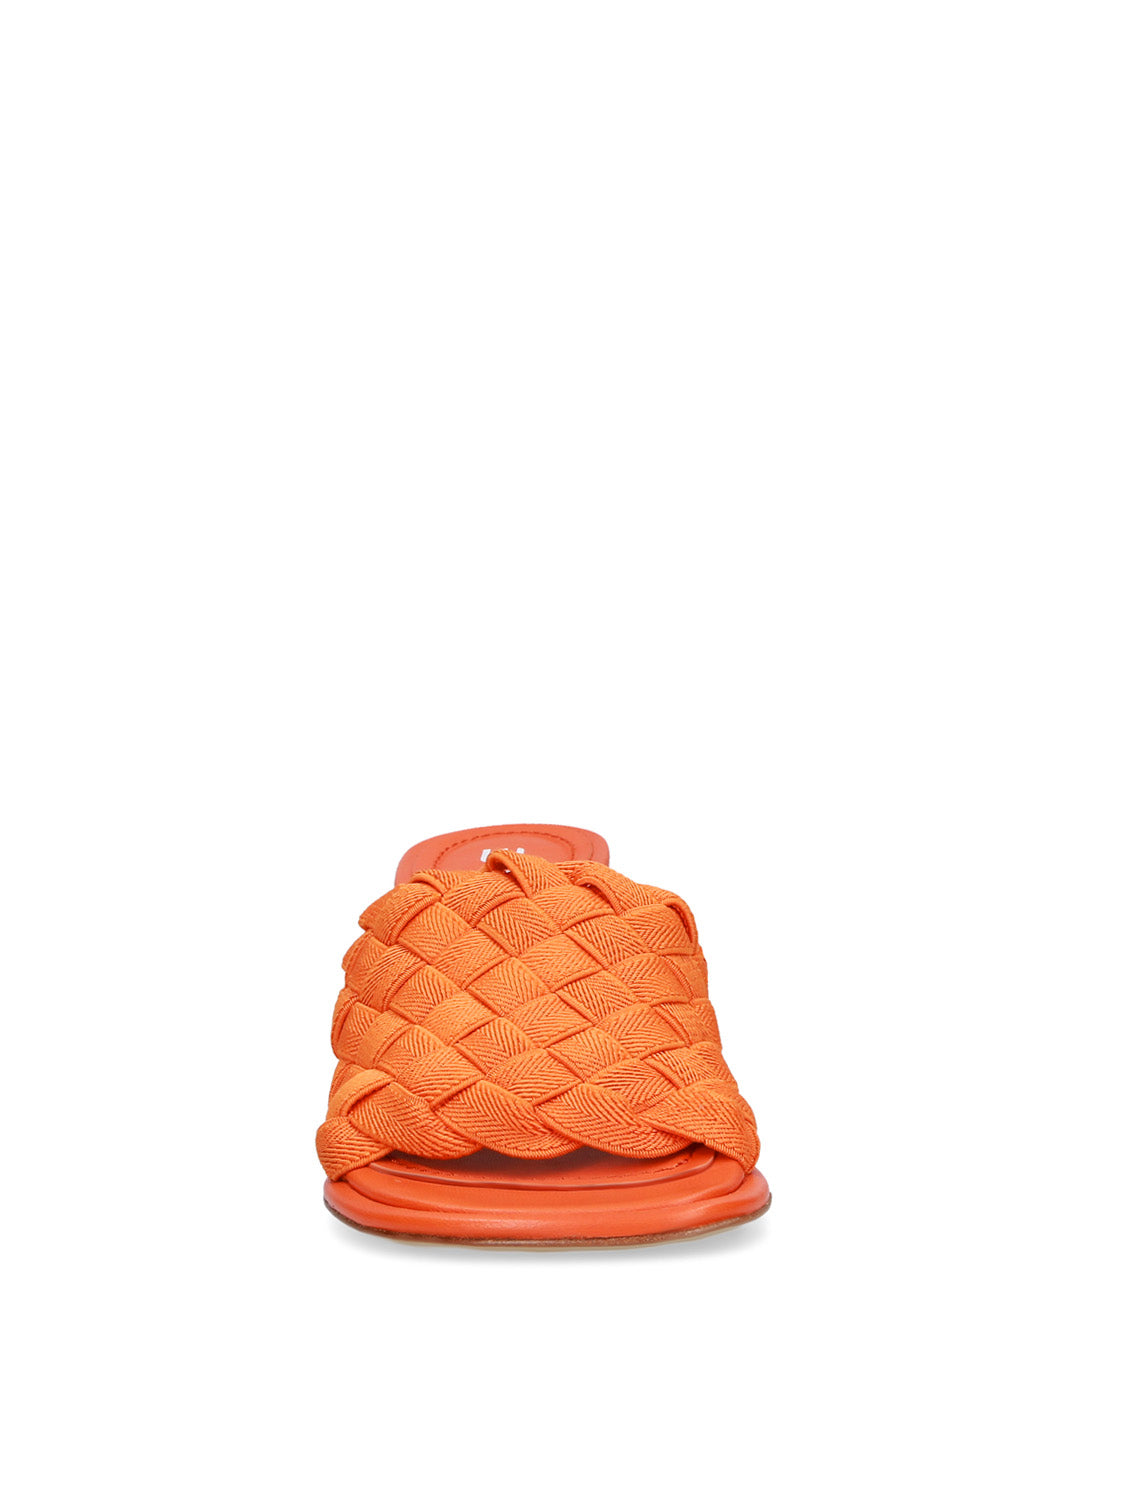 Sandalo Mules Arancione